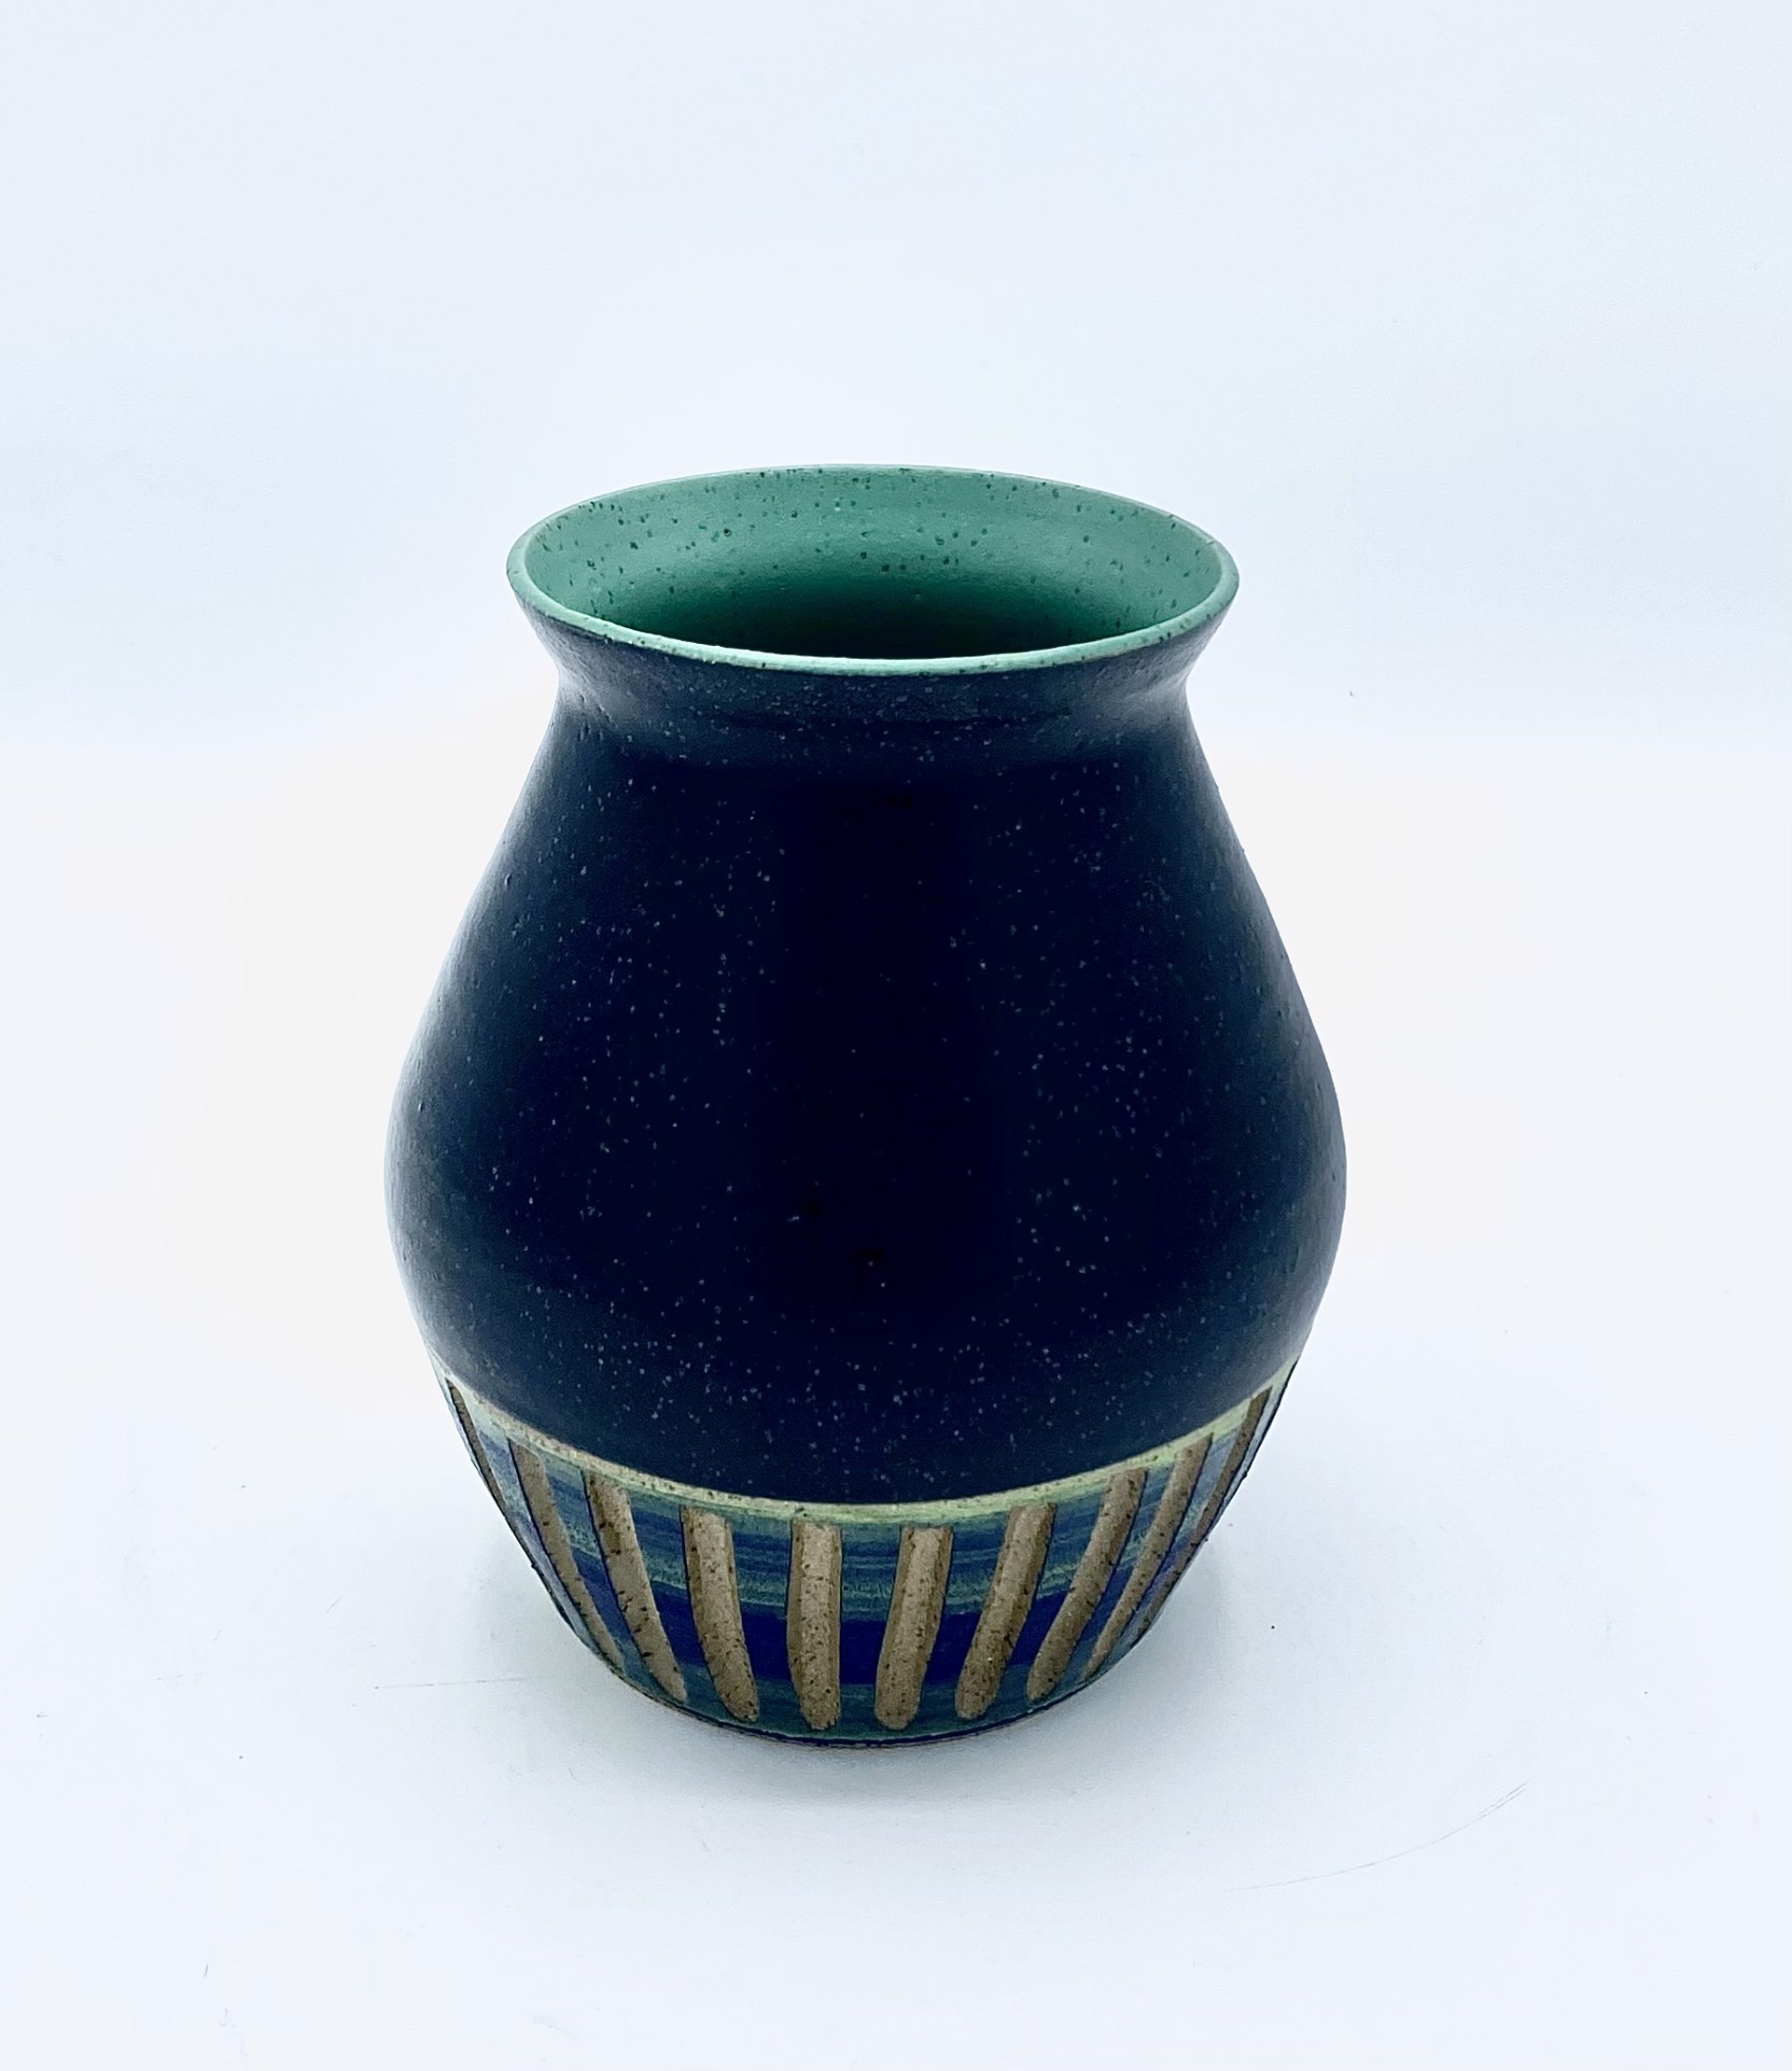 Black Matte and Teal Glaze Carved Vase by Messy Pots Pottery